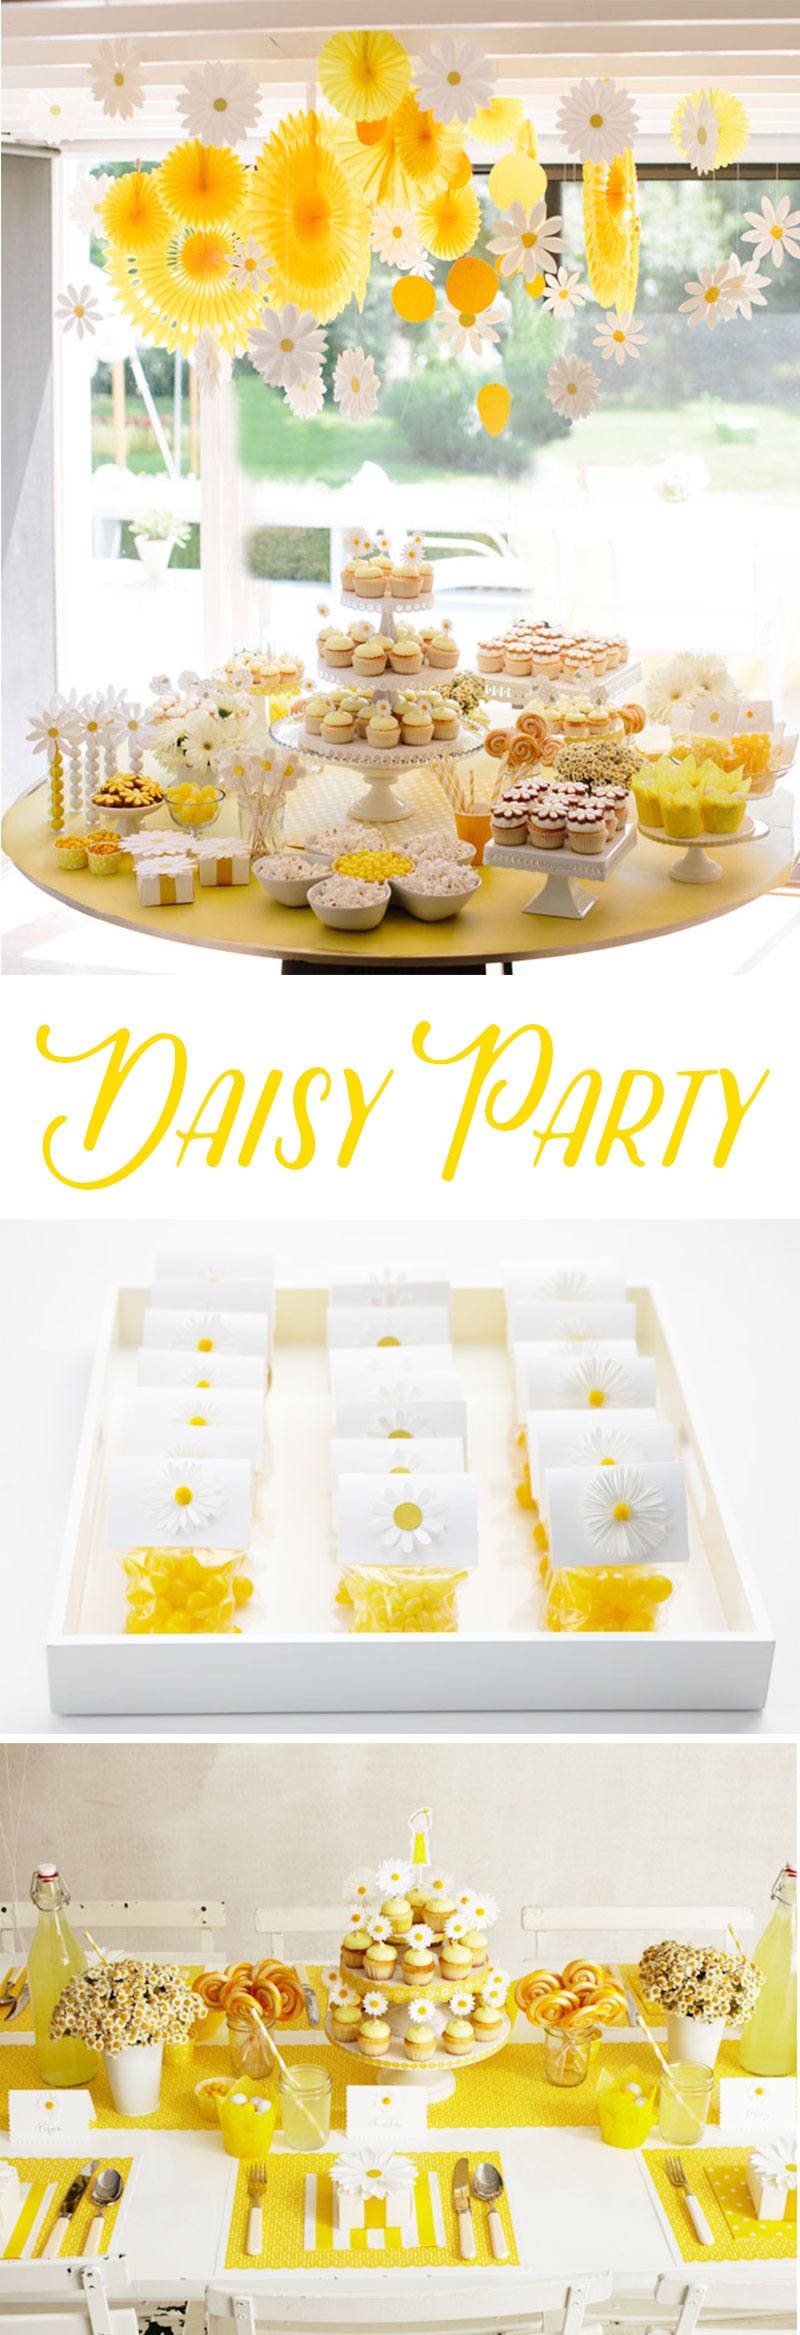 Daisy Party Ideas on Love The Day